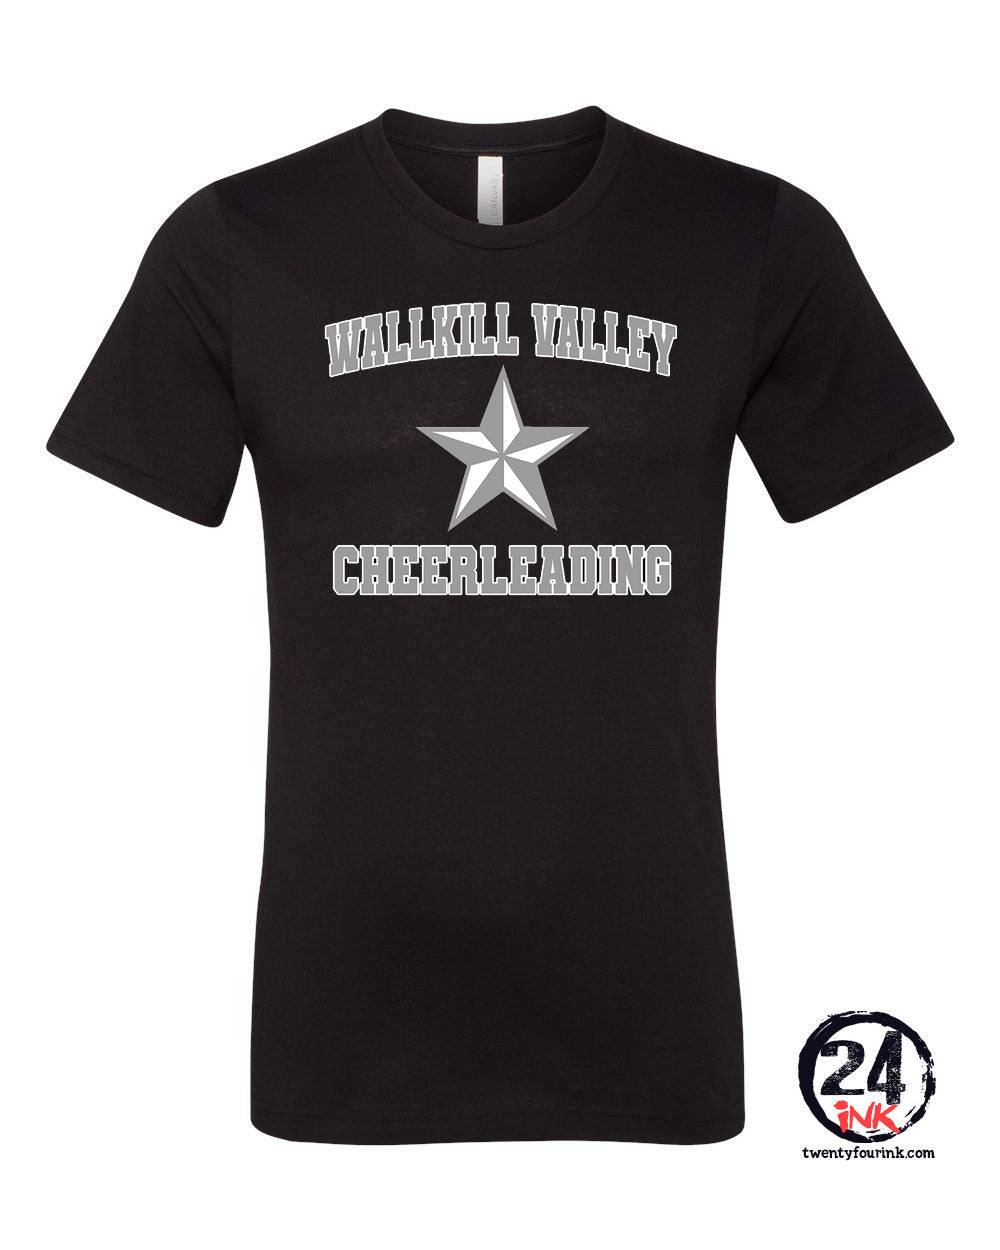 Wallkill Cheer design 6 T-Shirt